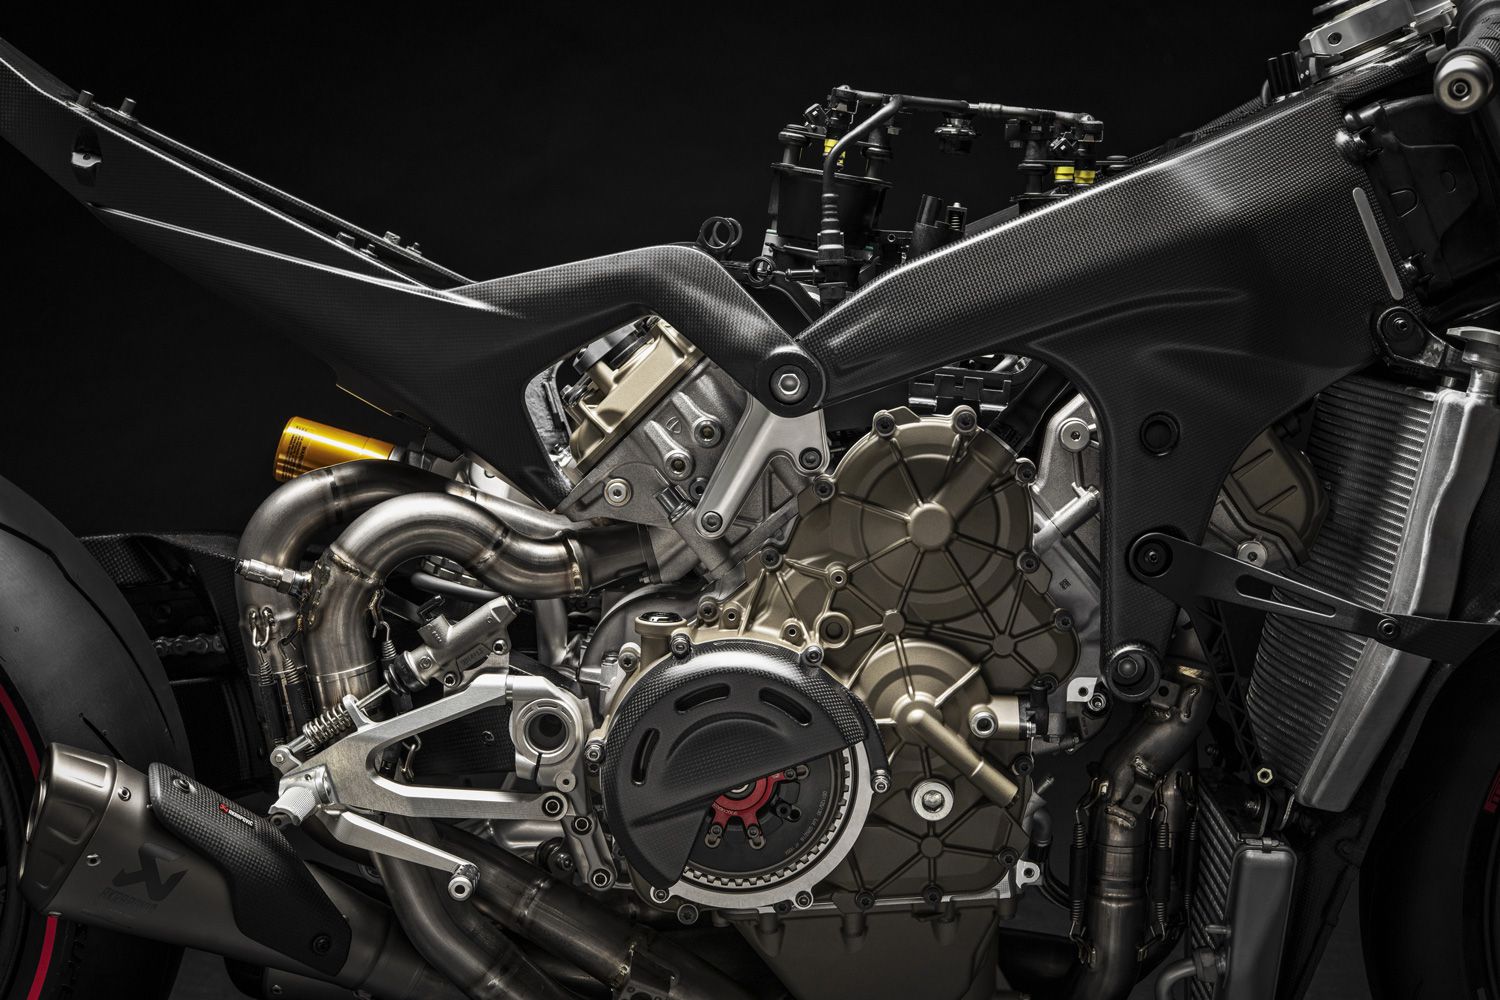 Ducati S Superleggera V4 First Look Cycle World